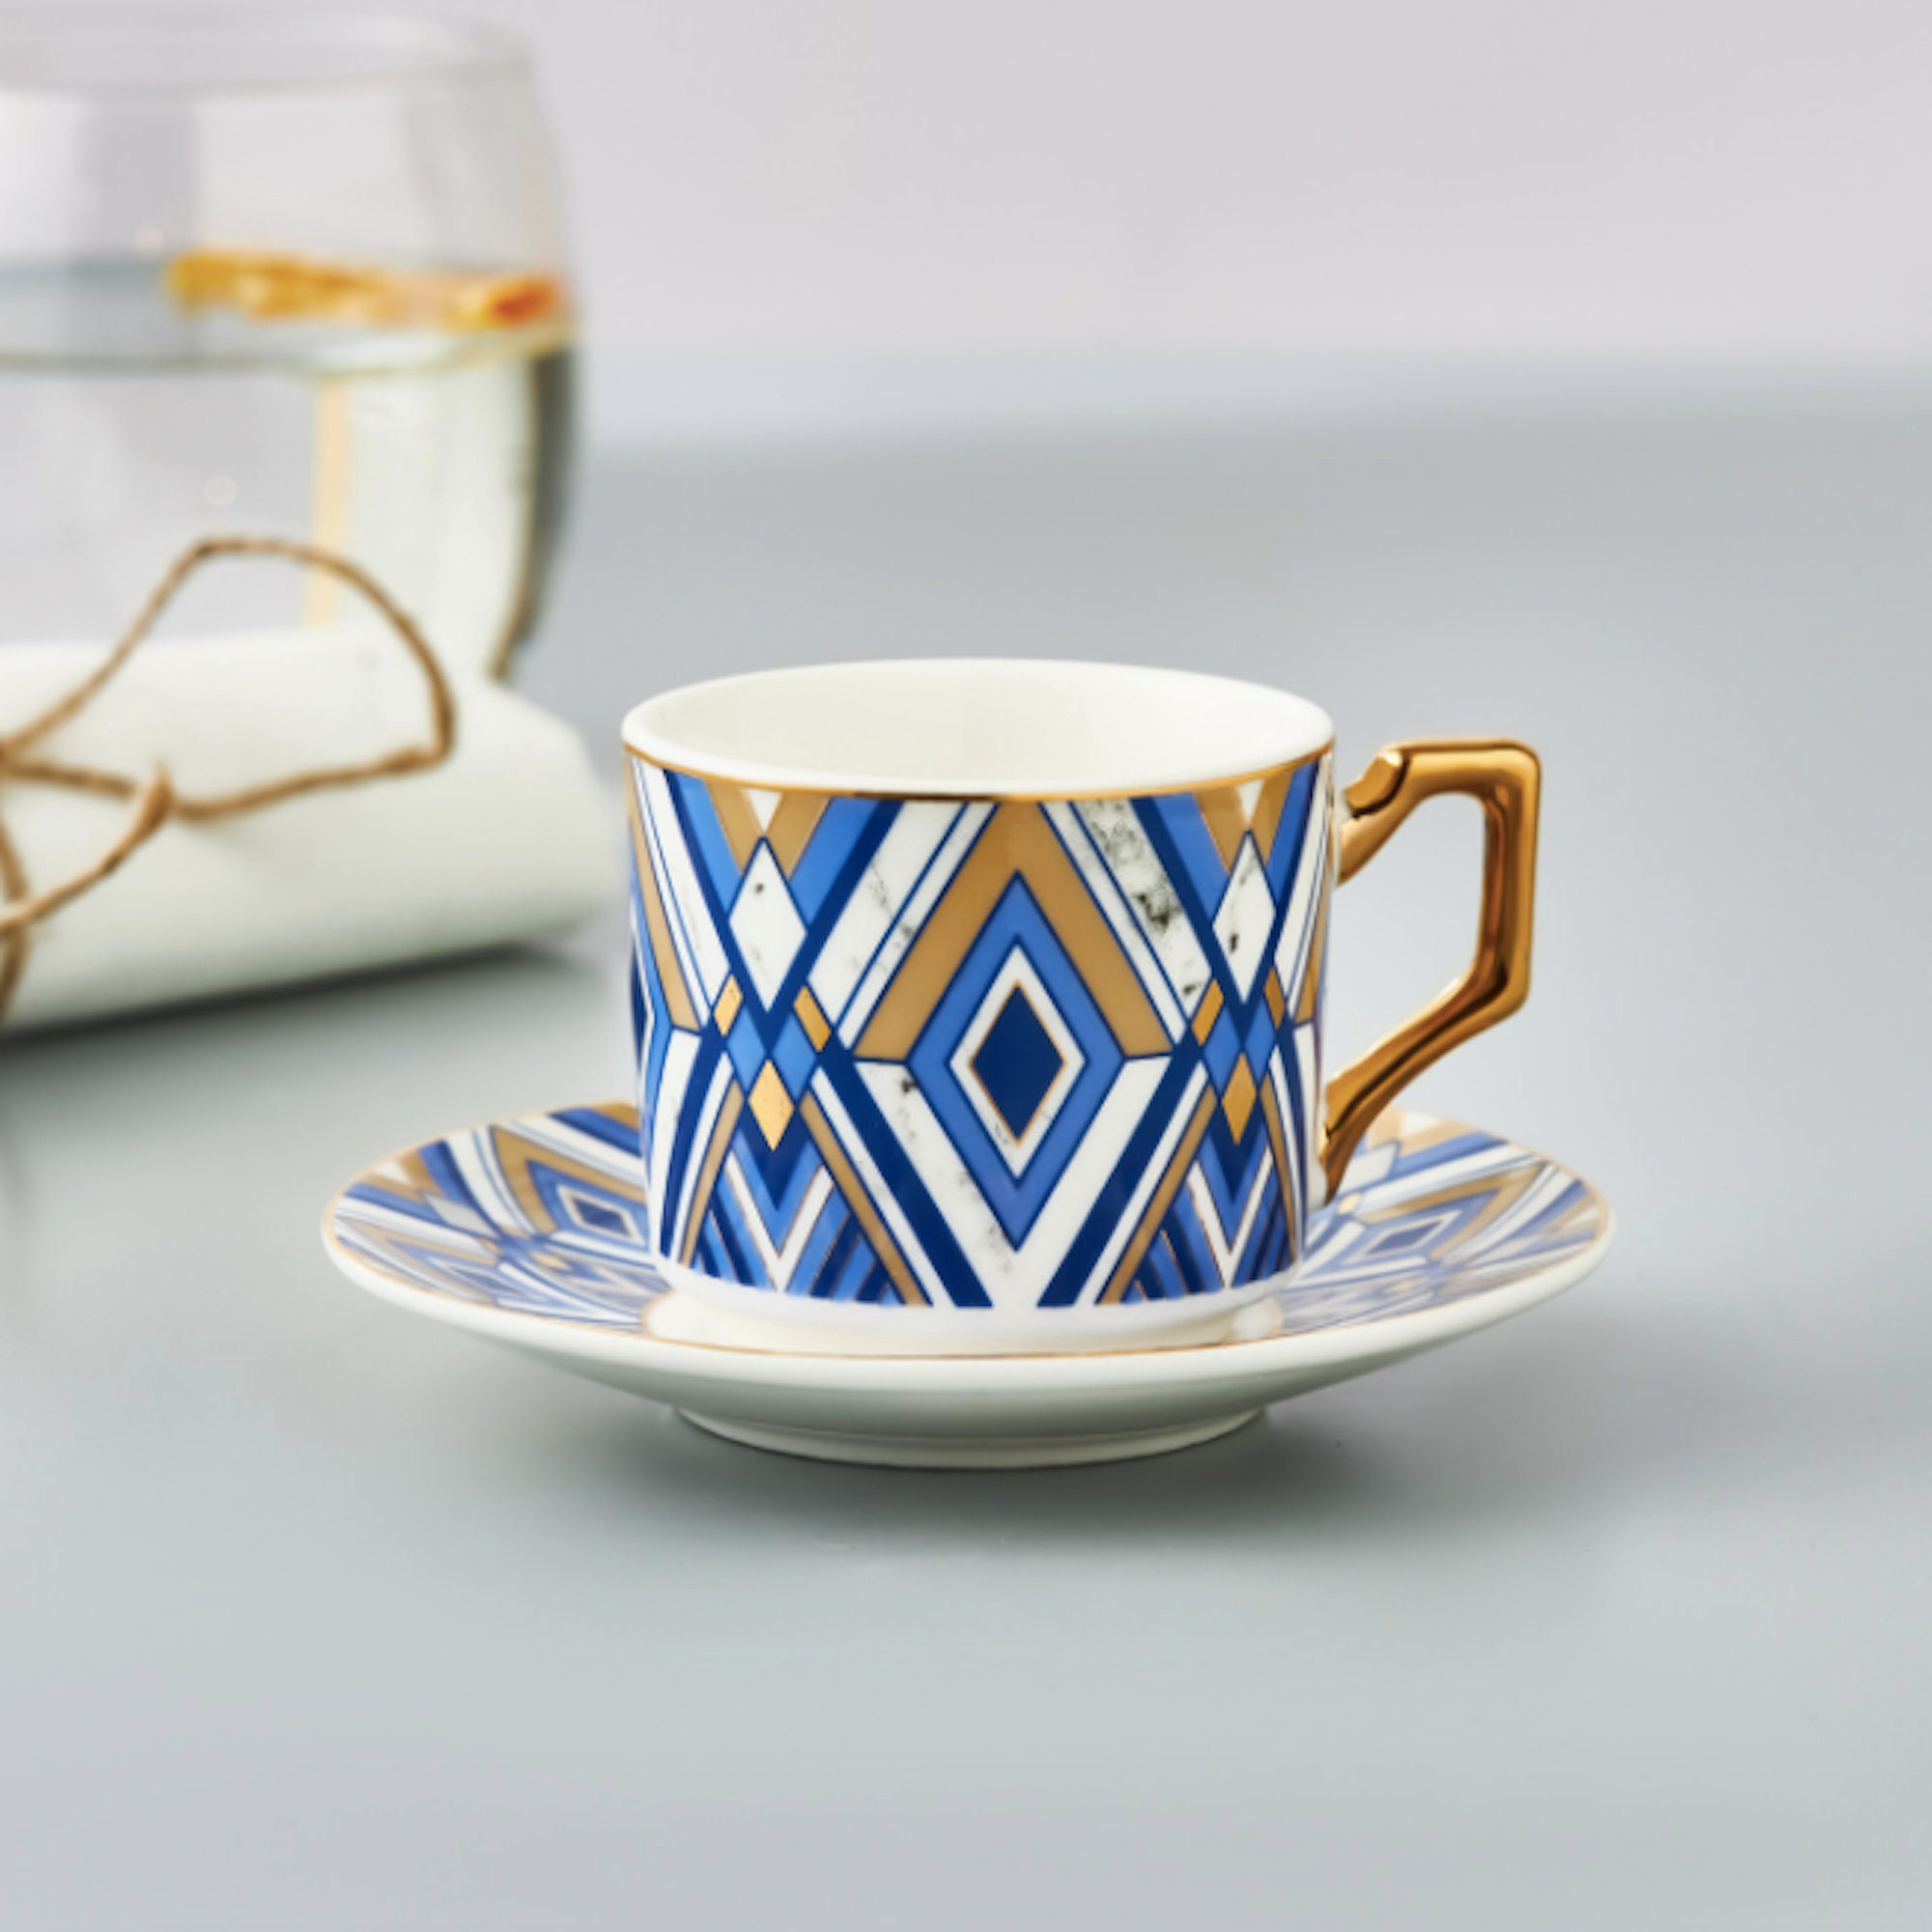 WE collection Unique Ceramic Espresso Cups, 3 oz Demitasse Cups, Set of 6  Embossed Vintage Glaze Small Espresso Coffee Cups (Blue)